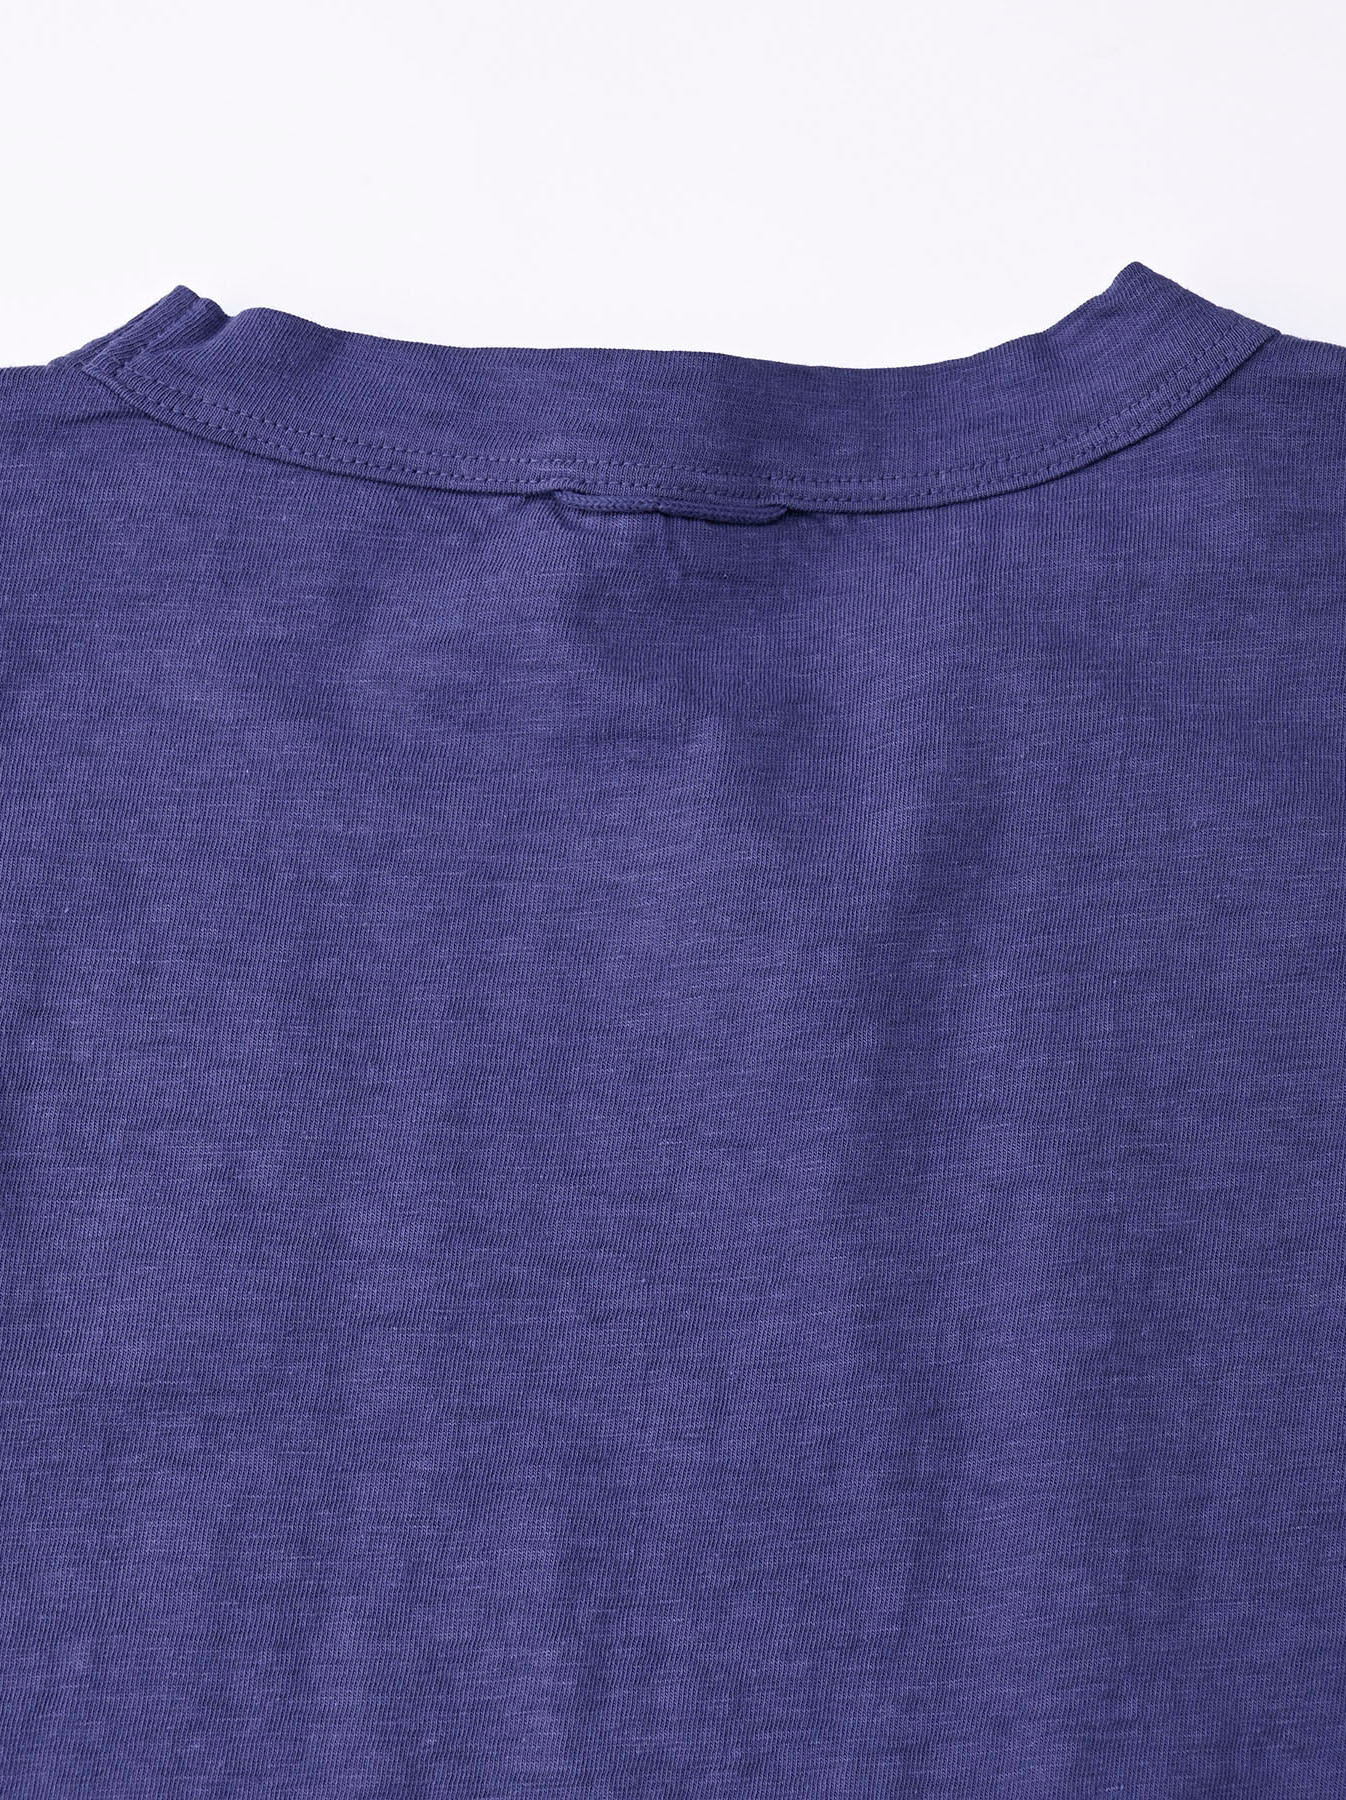 Anuenue Hula Girl Print 908 Ocean Cotton T-Shirt - 45r